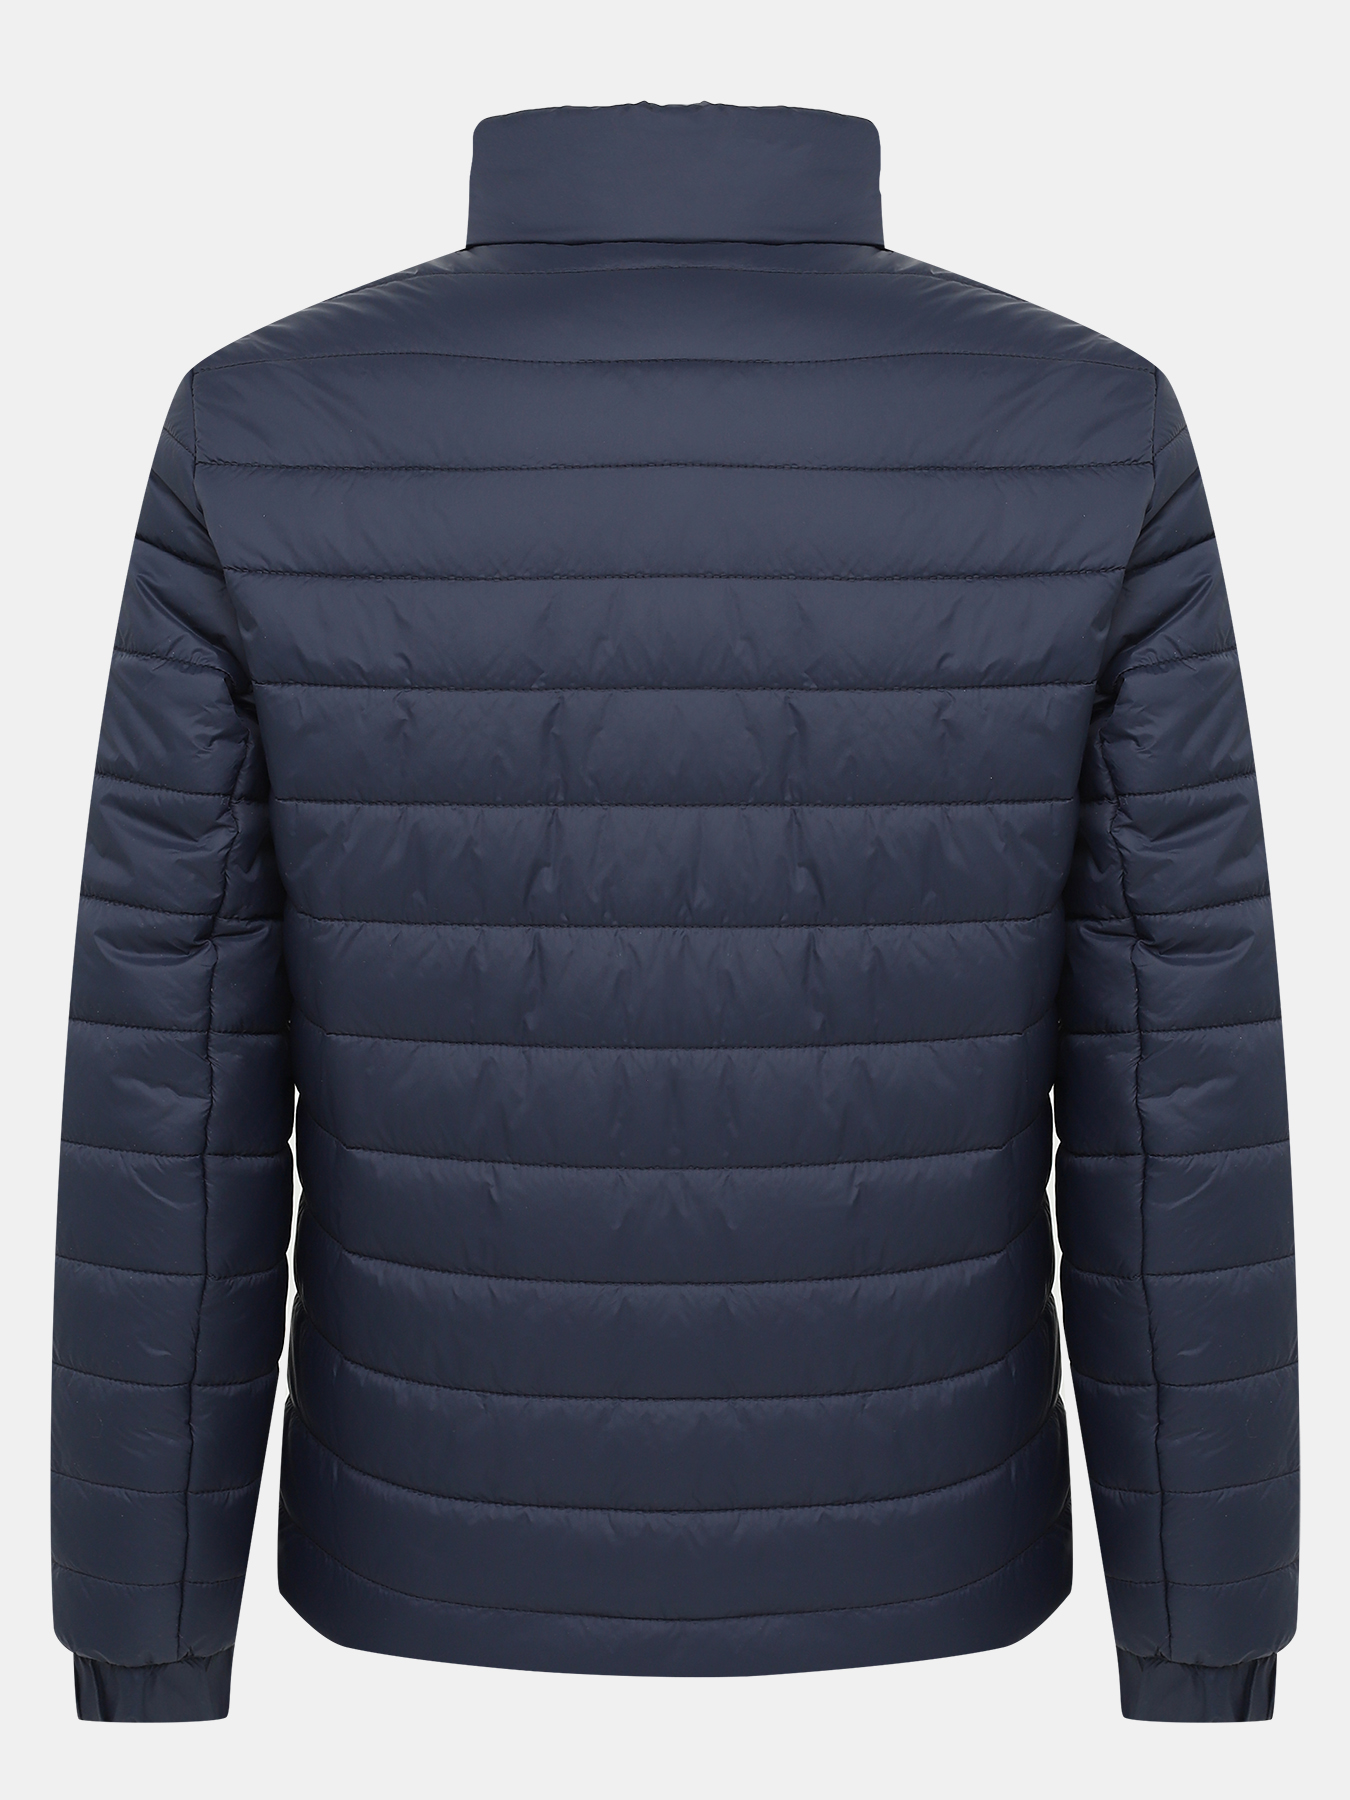 Куртка Benti HUGO 437018-045, цвет темно-синий, размер 52-54 - фото 5